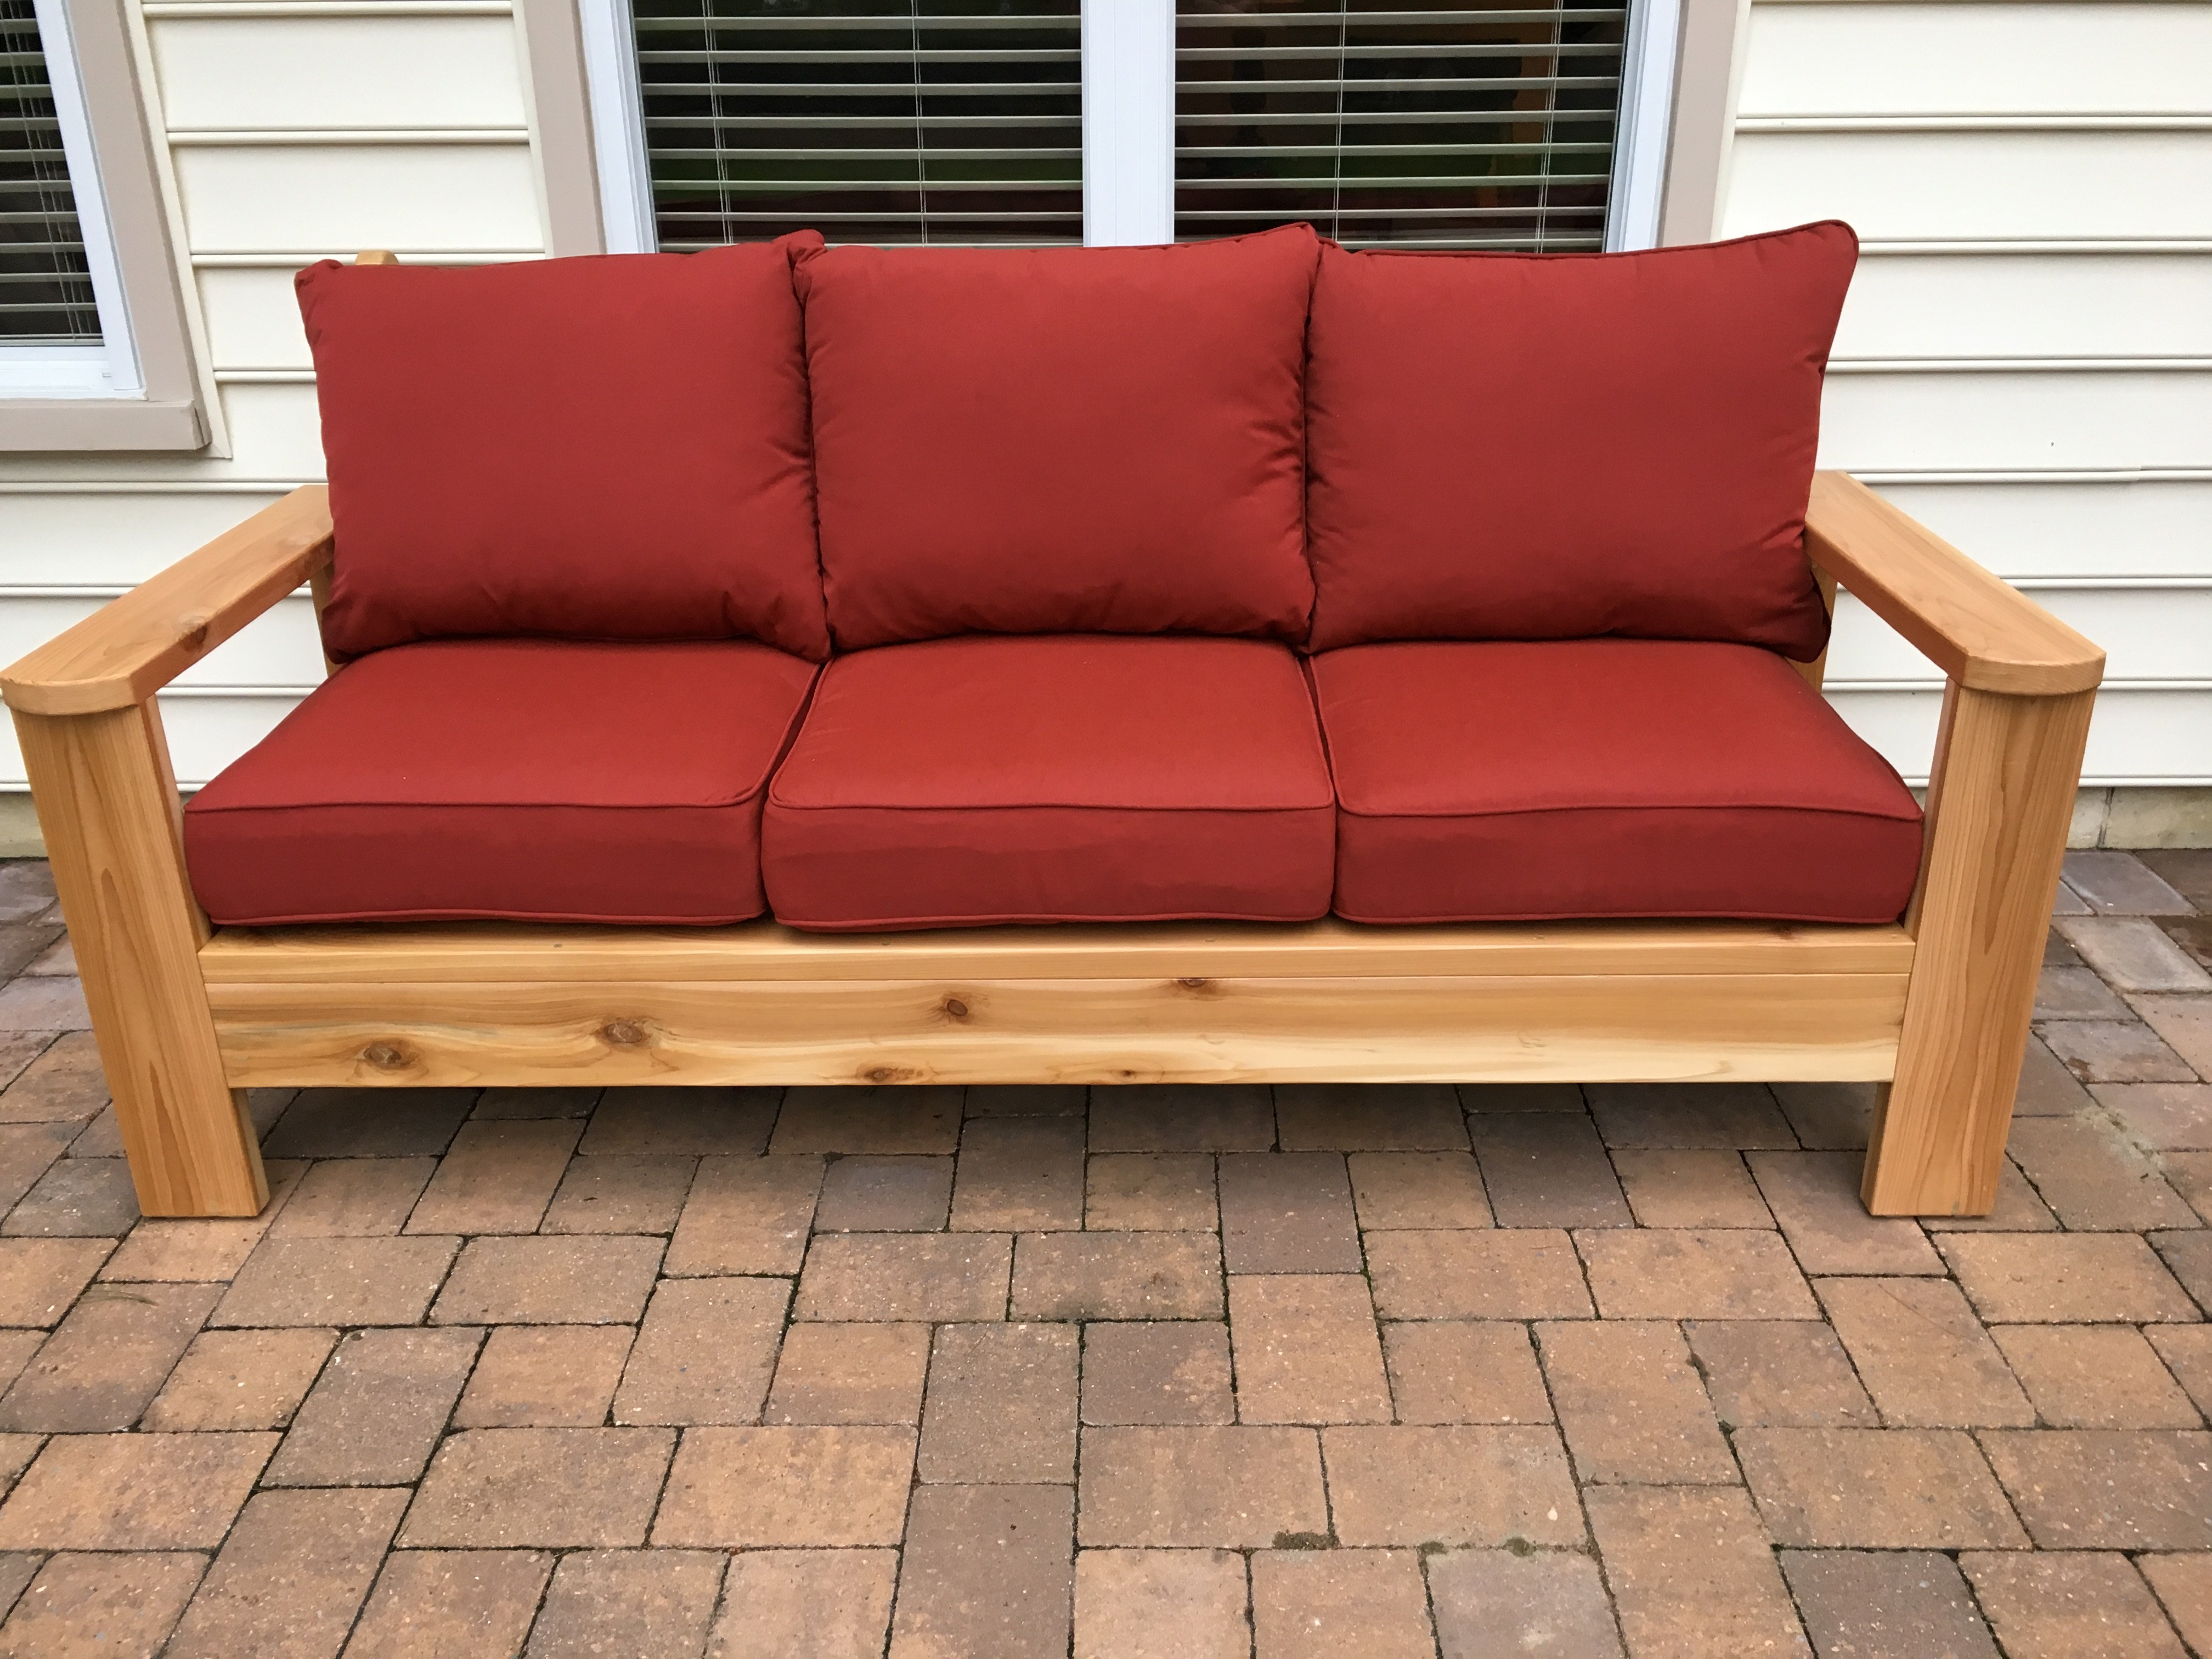 Ana White Cedar Outdoor Sofa DIY Projects